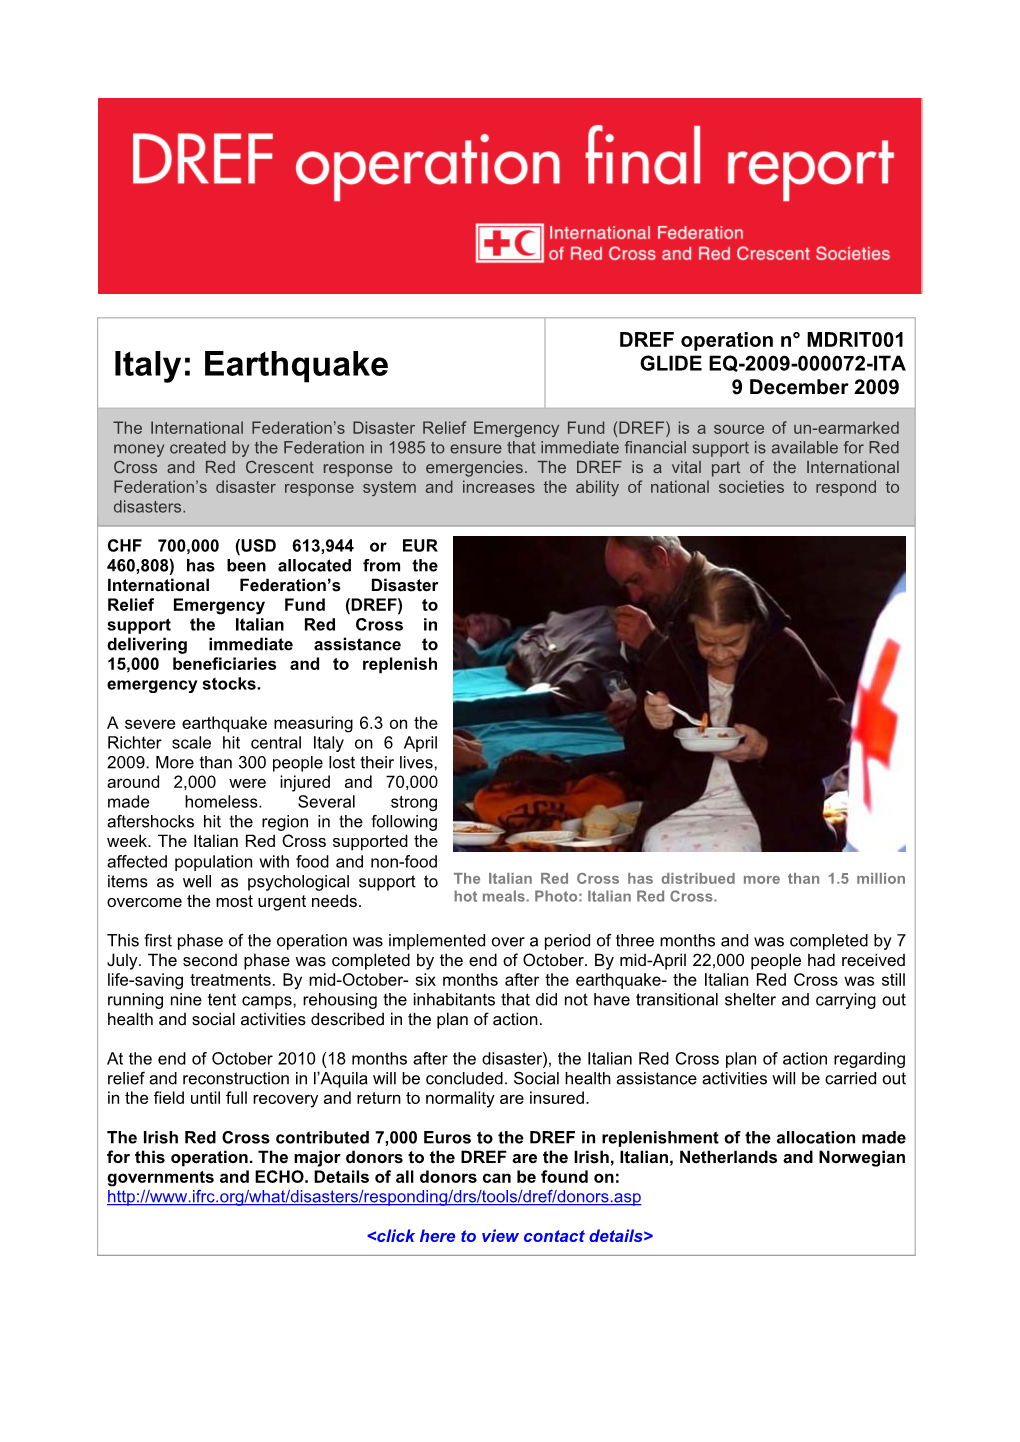 Italy: Earthquake GLIDE EQ-2009-000072-ITA 9 December 2009